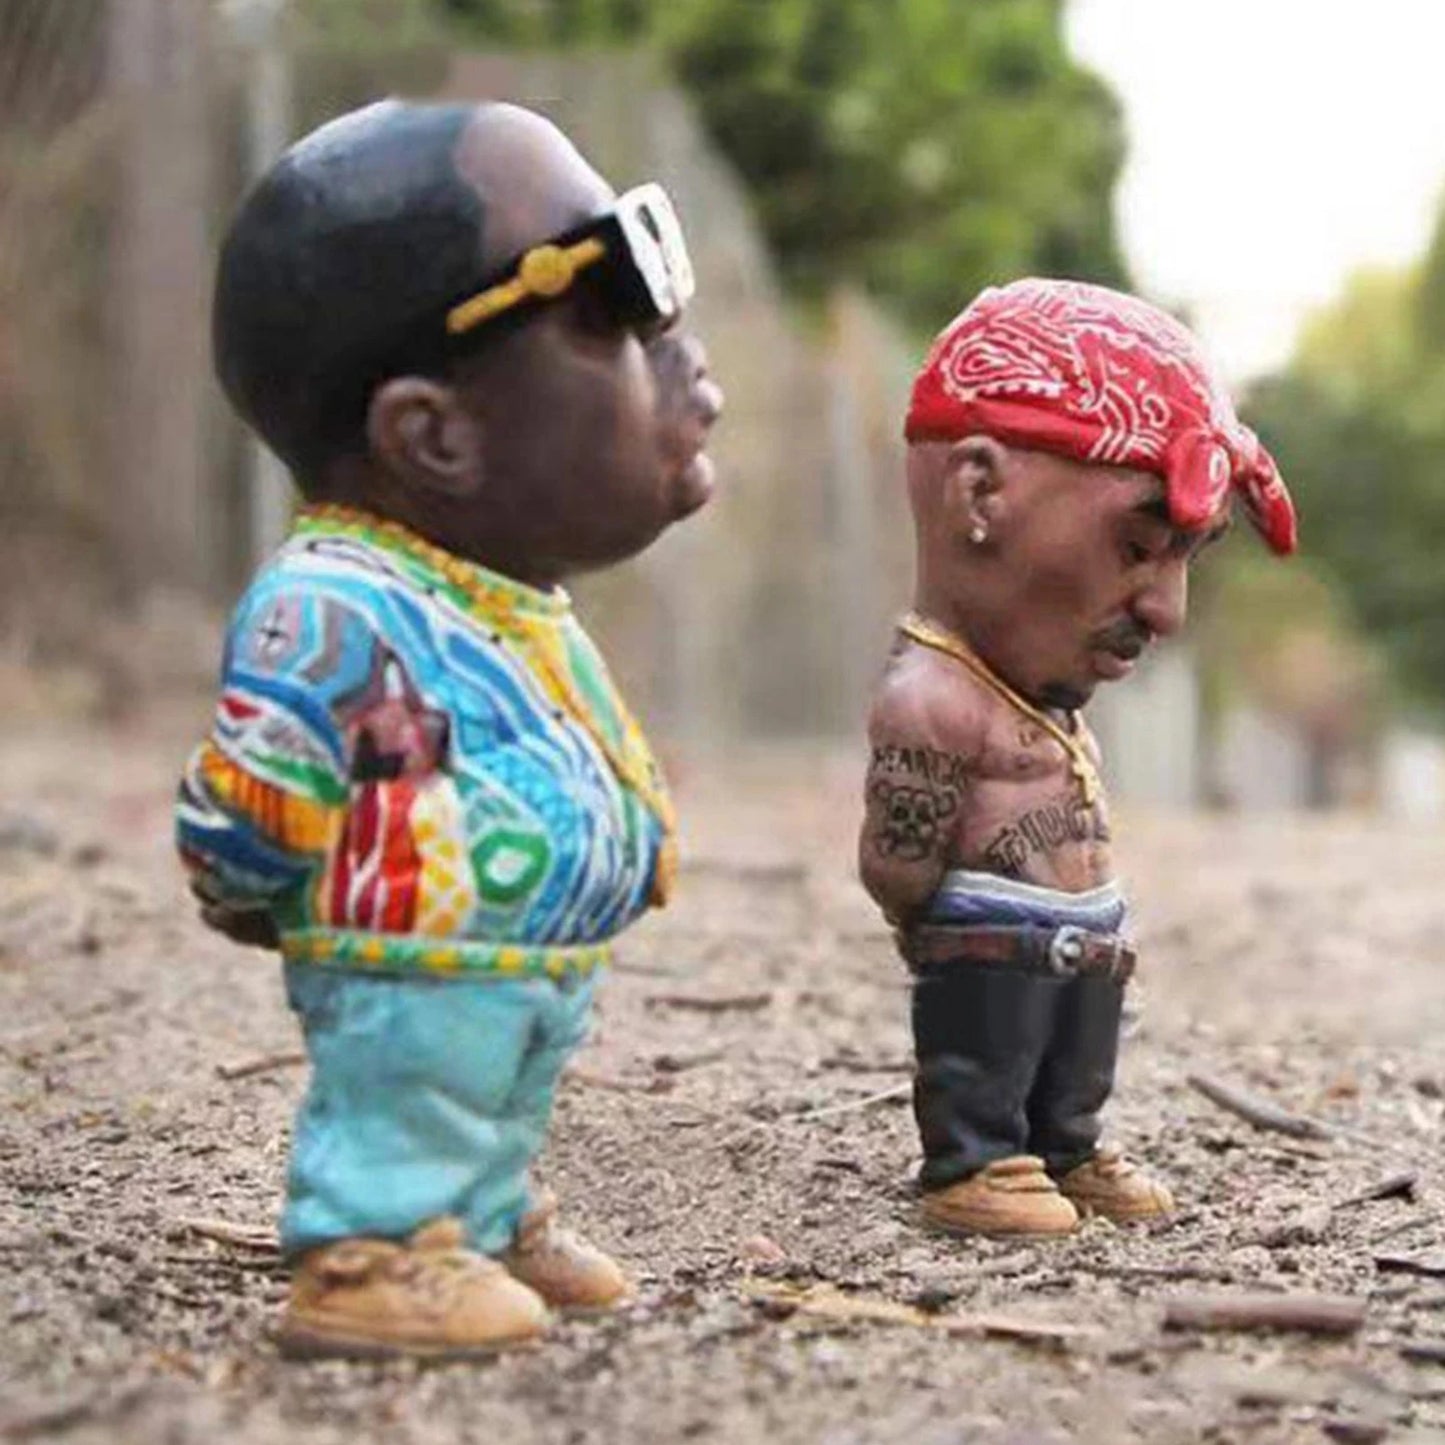 Rapper figurines